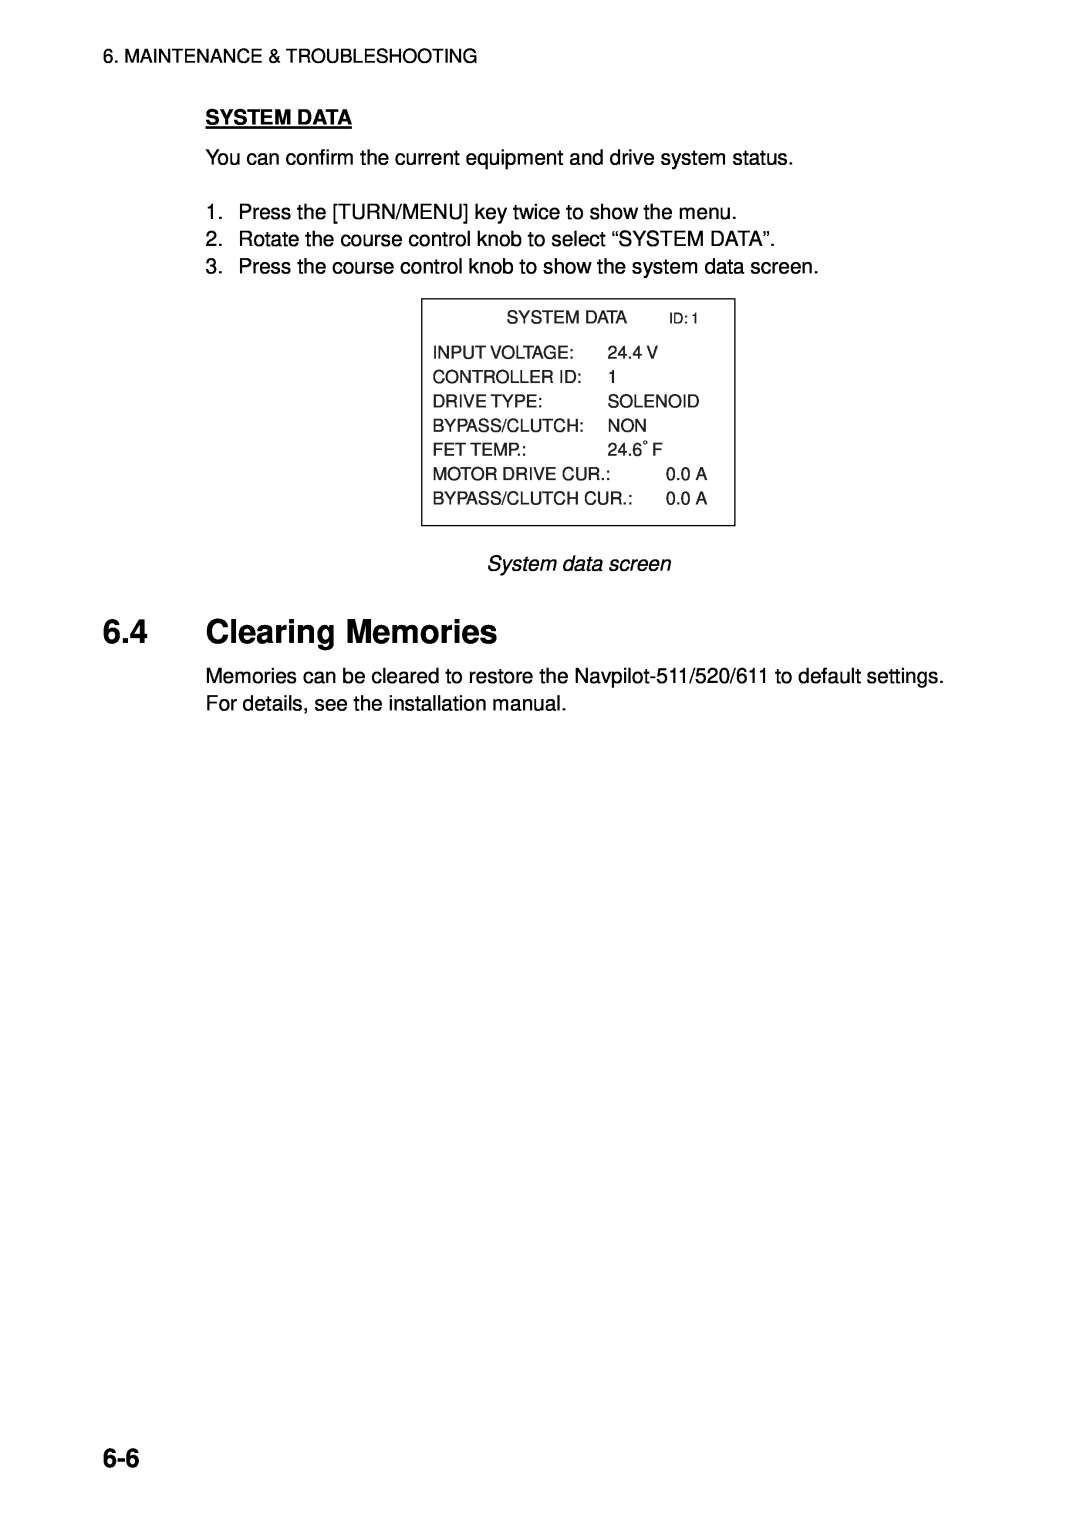 Furuno 511, 520, 611 manual Clearing Memories, System Data, System data screen 